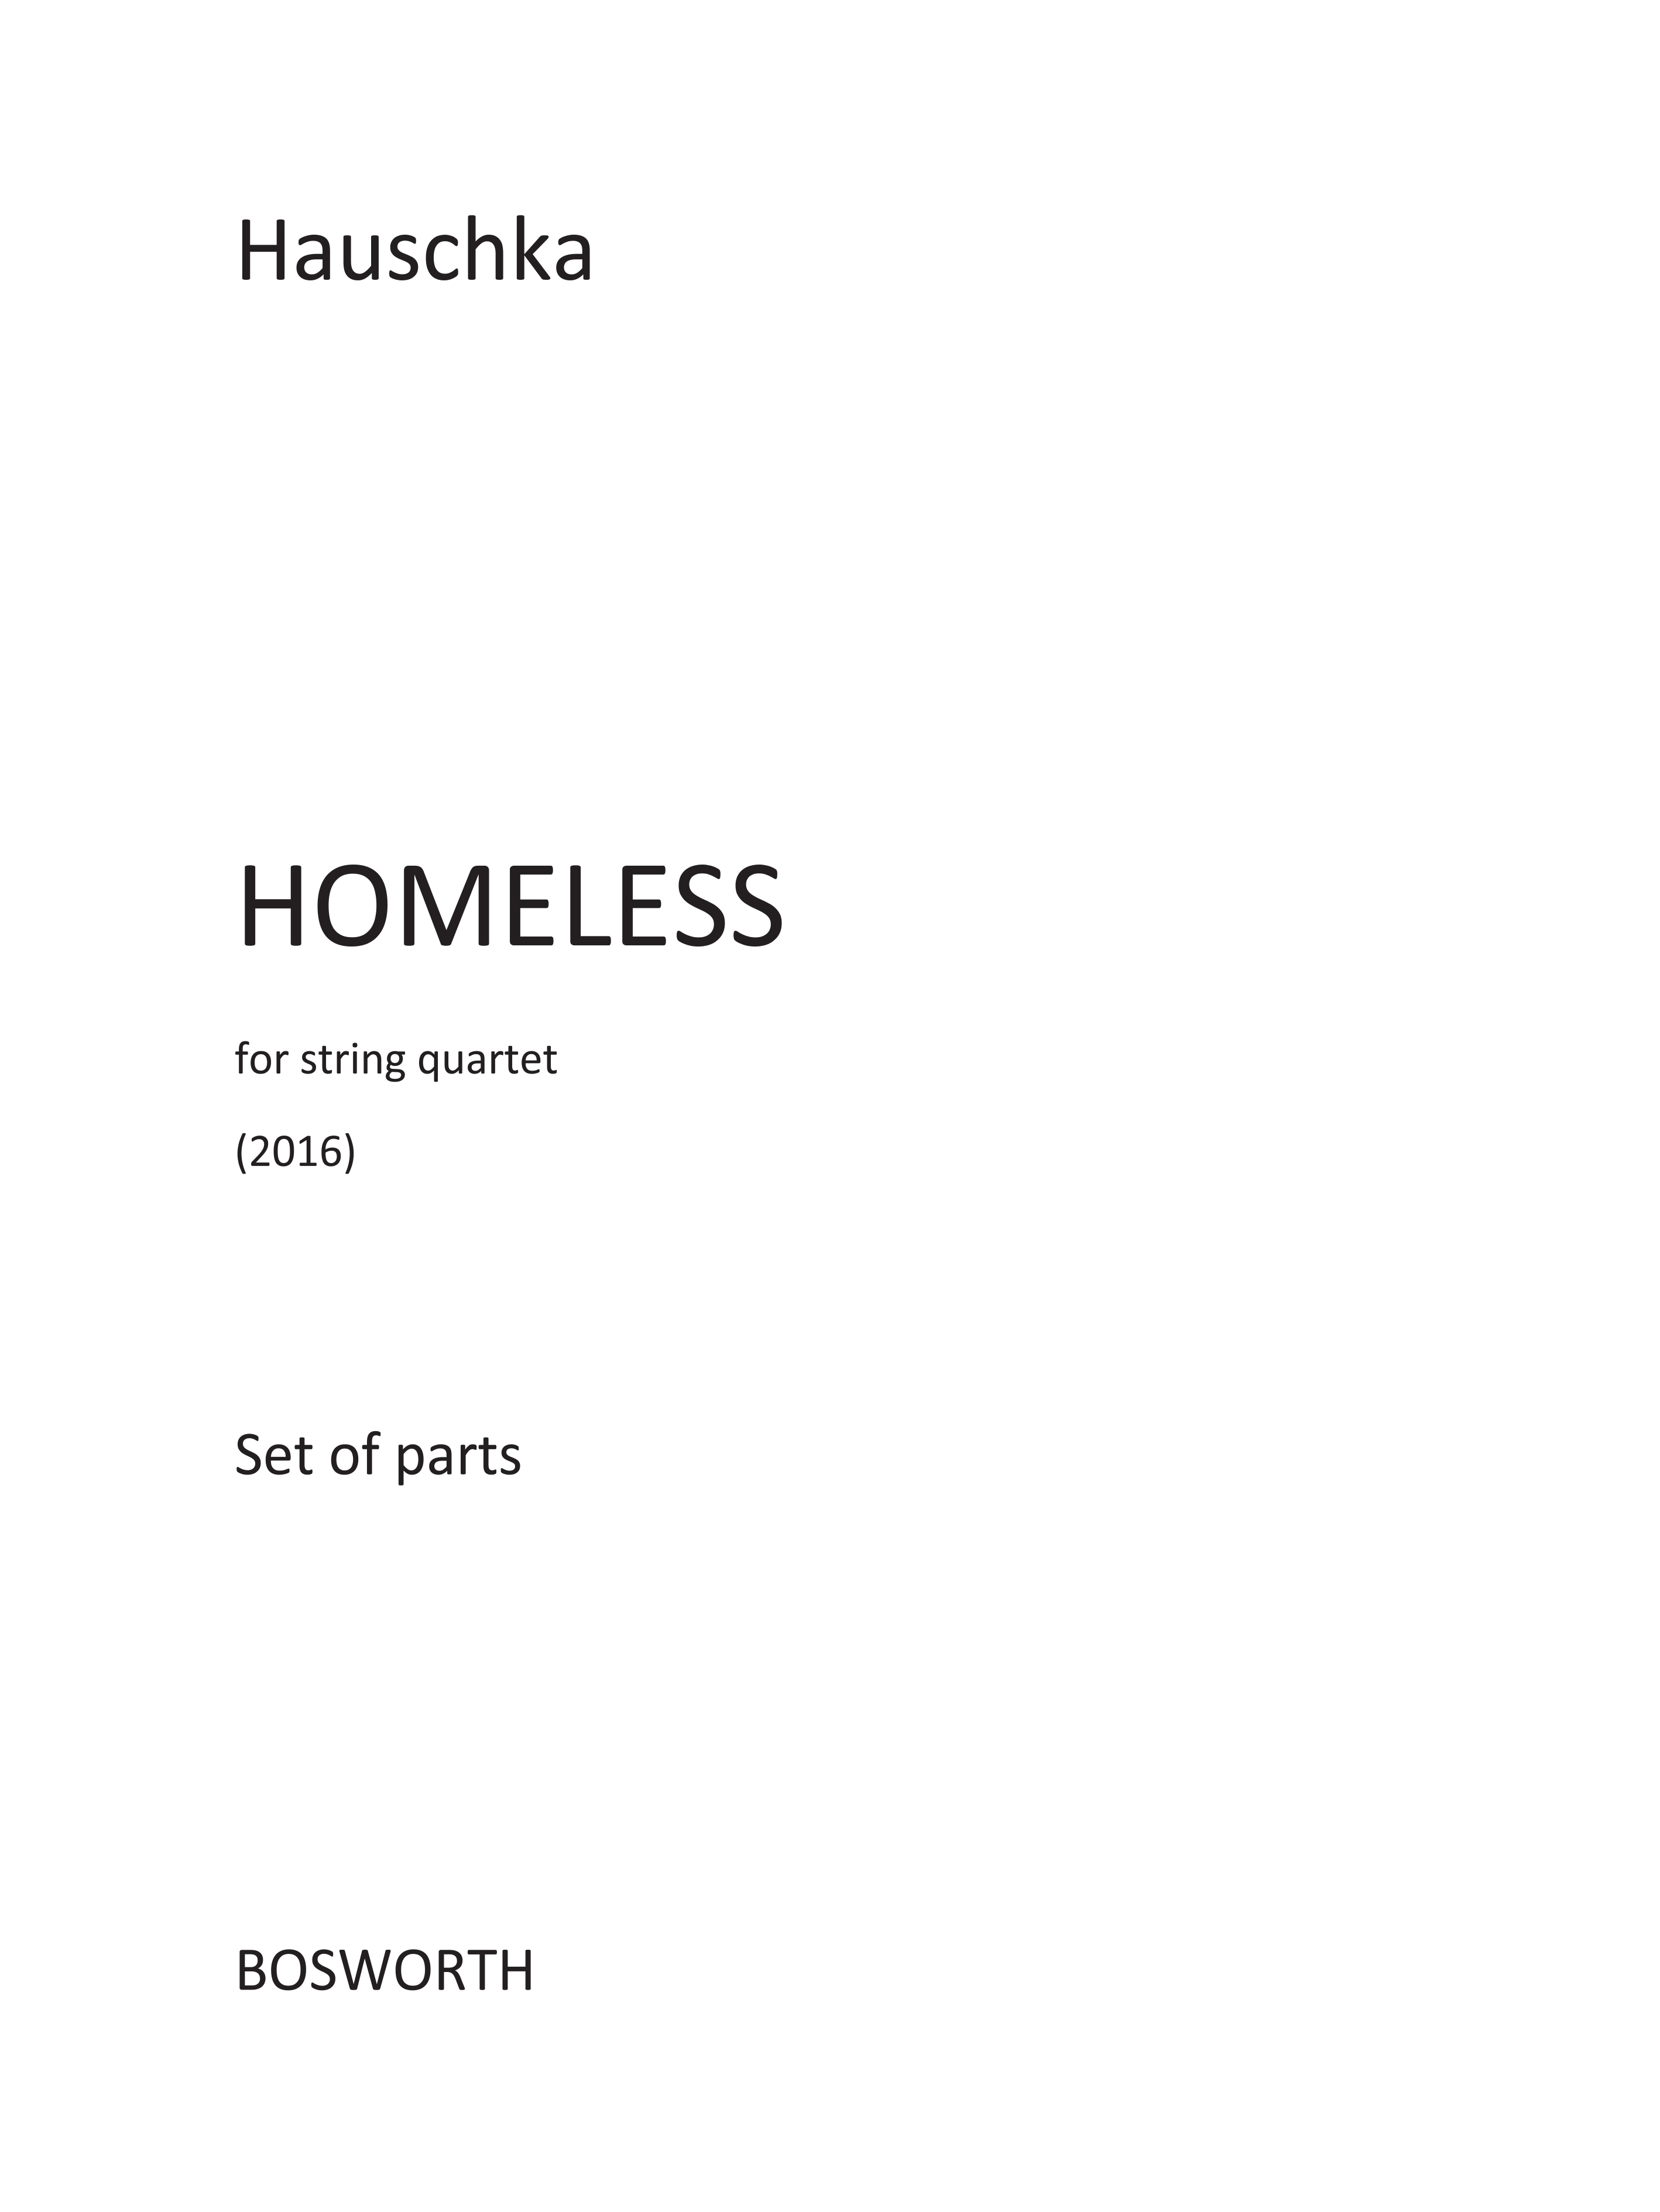 Hauschka: Homeless (Parts): String Quartet: Parts